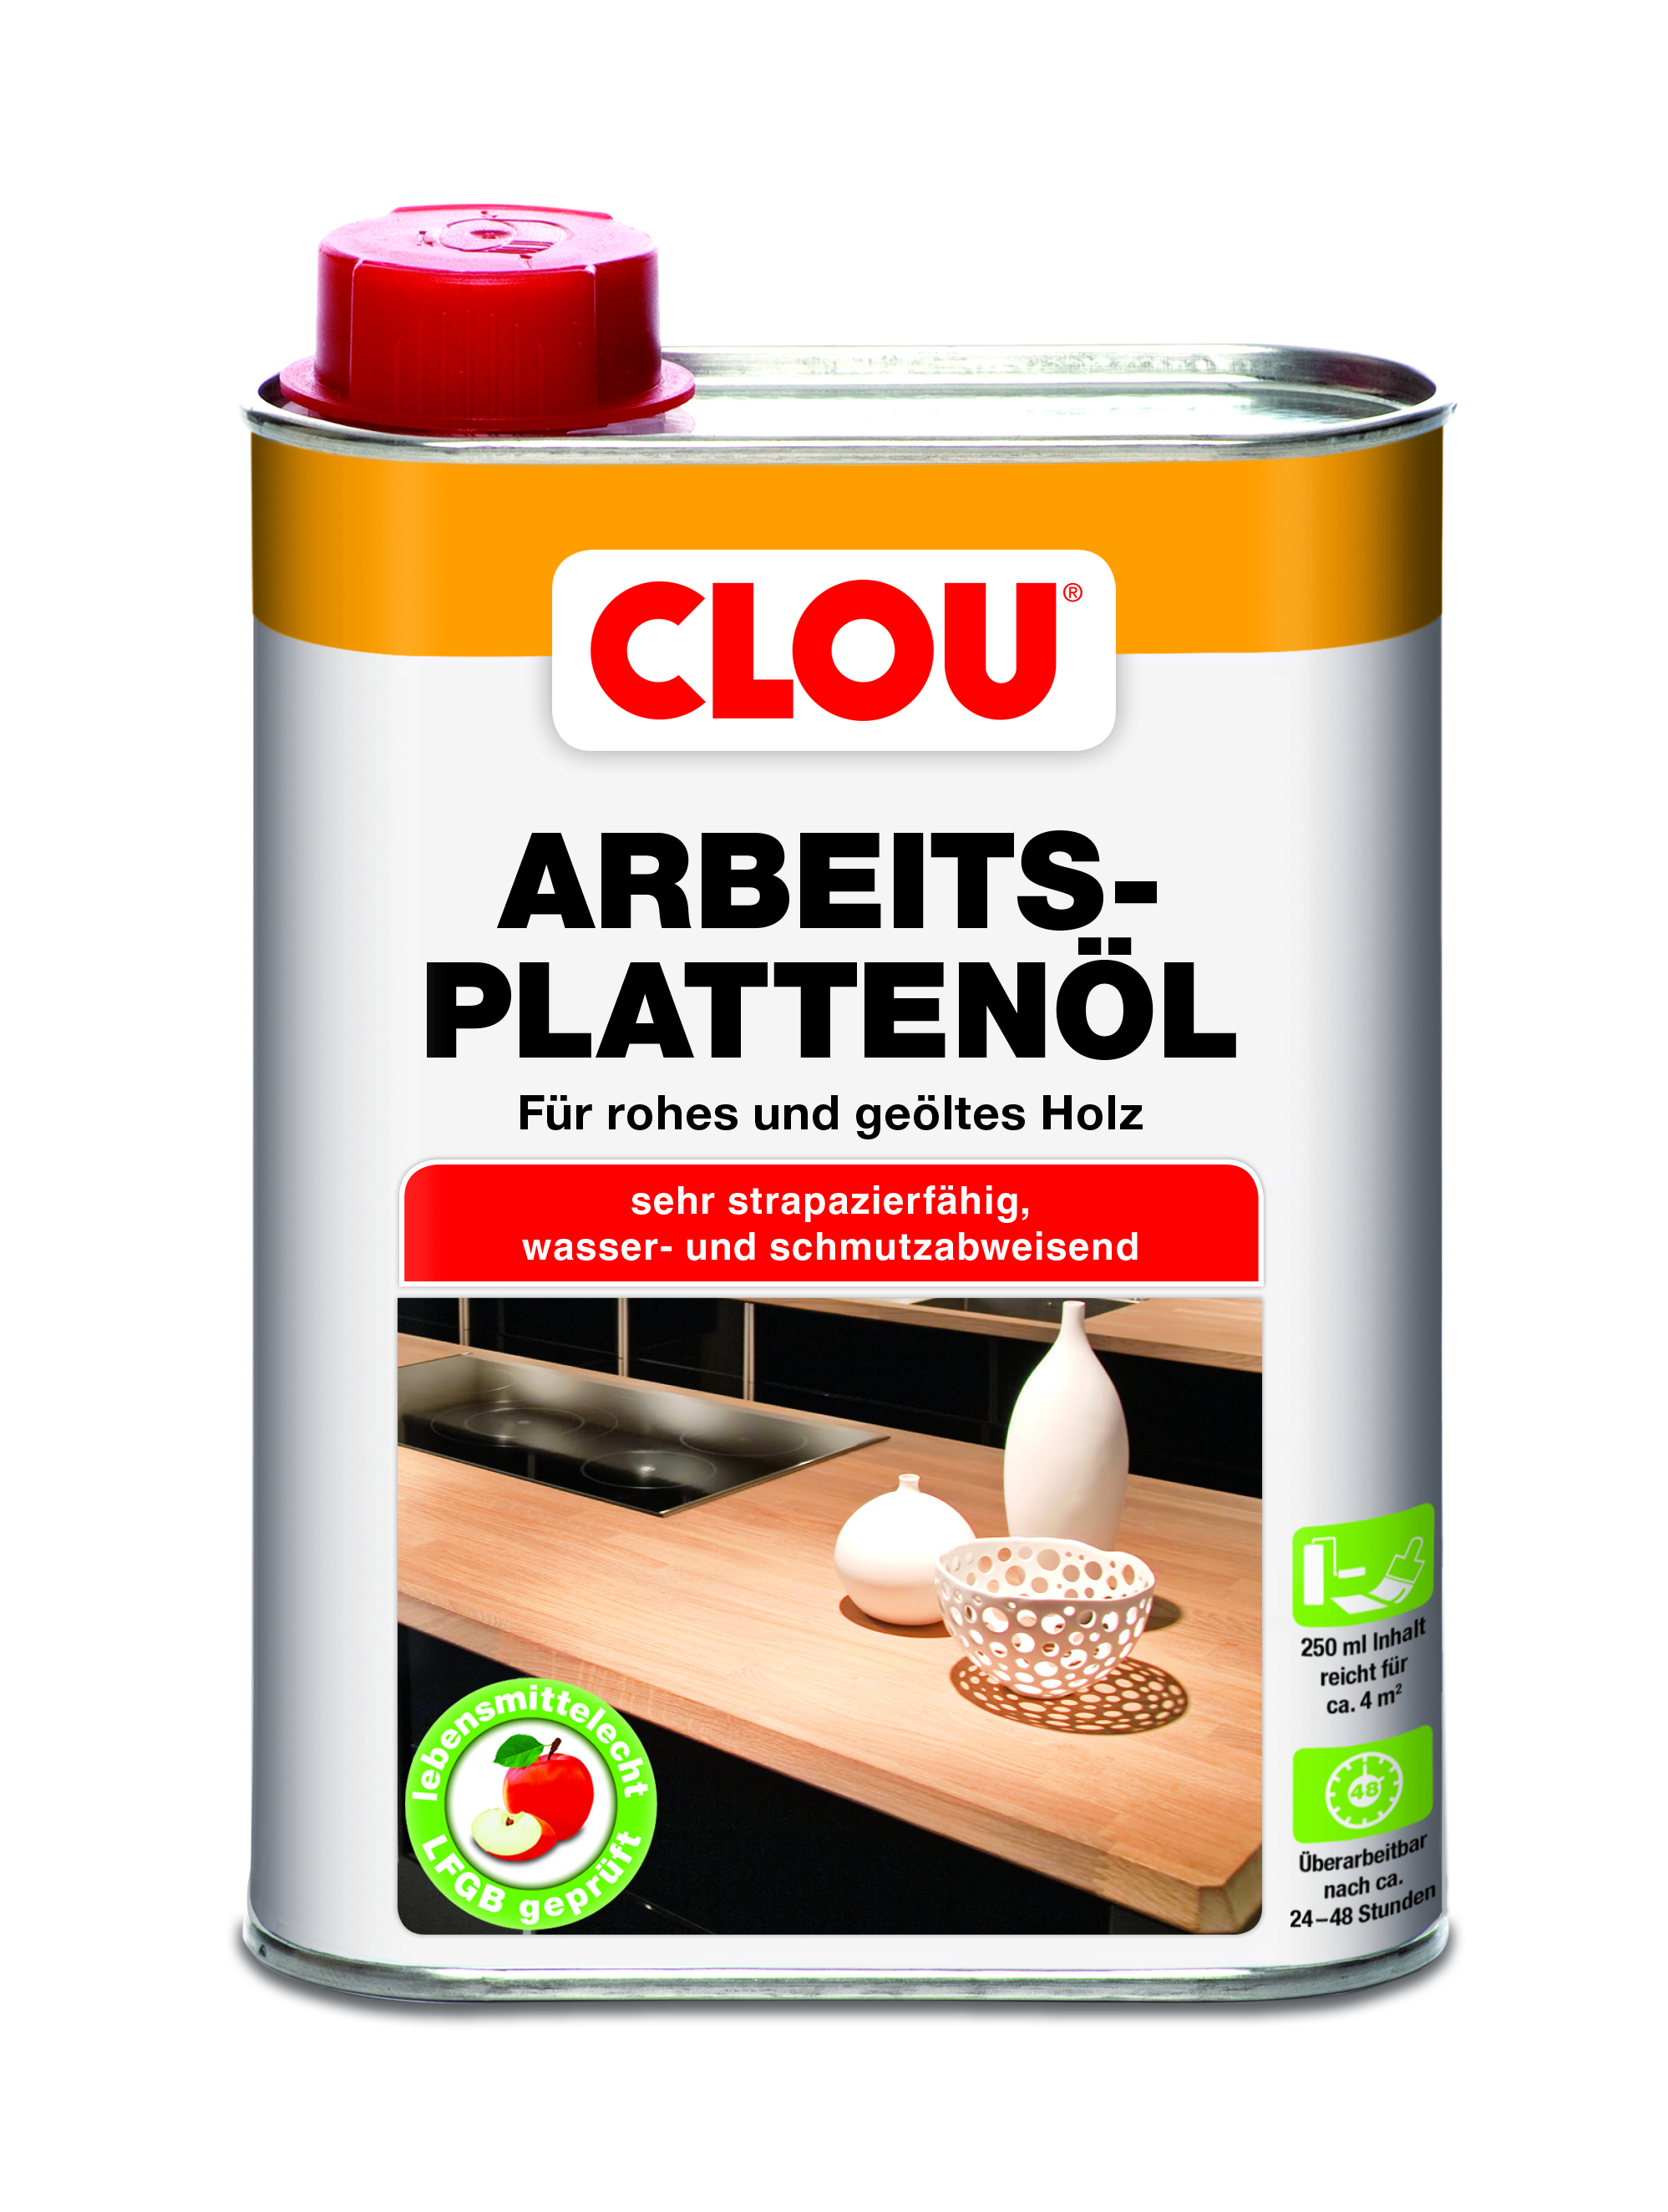 CLOU Arbeitsplattenöl 250 ml, Farblos